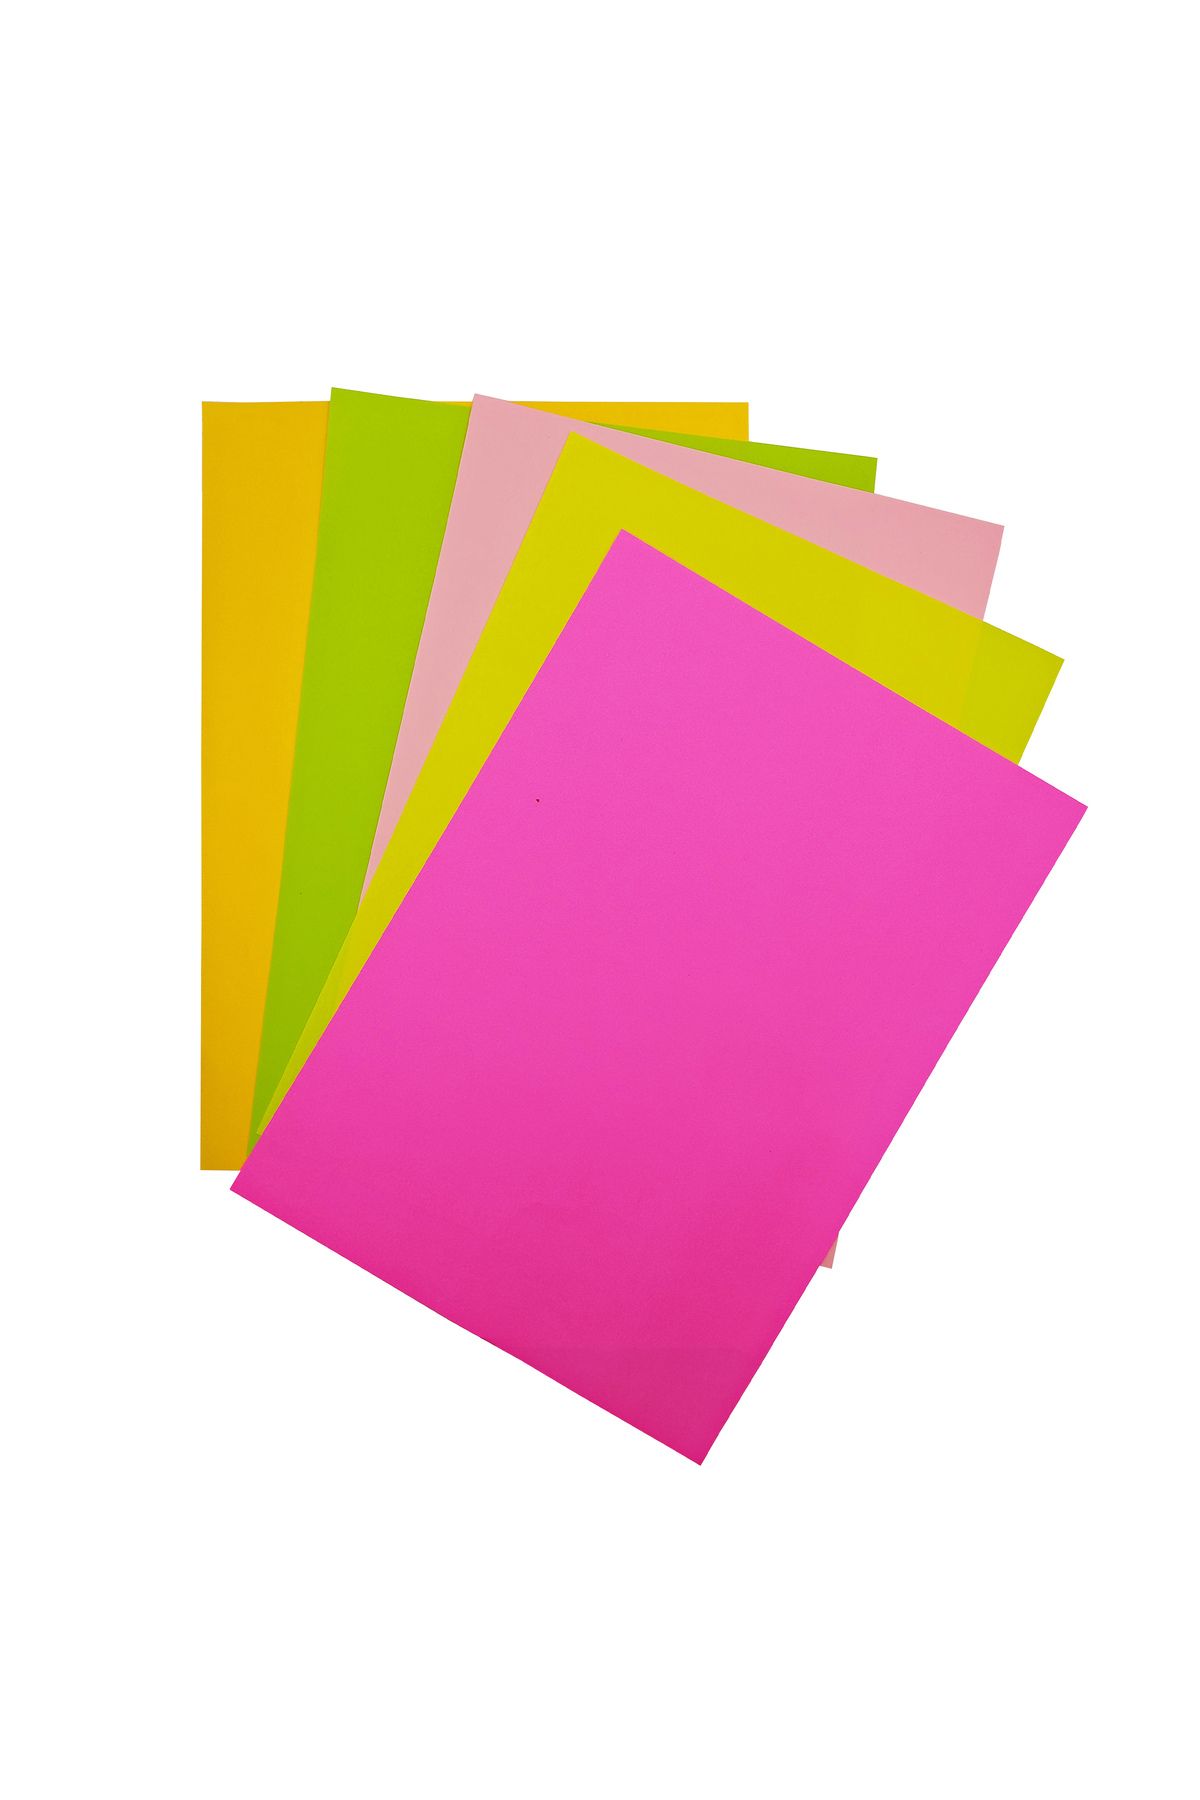 Limmy Fotokopi Kağıdı Fosforlu Renkli A4 100 Lü